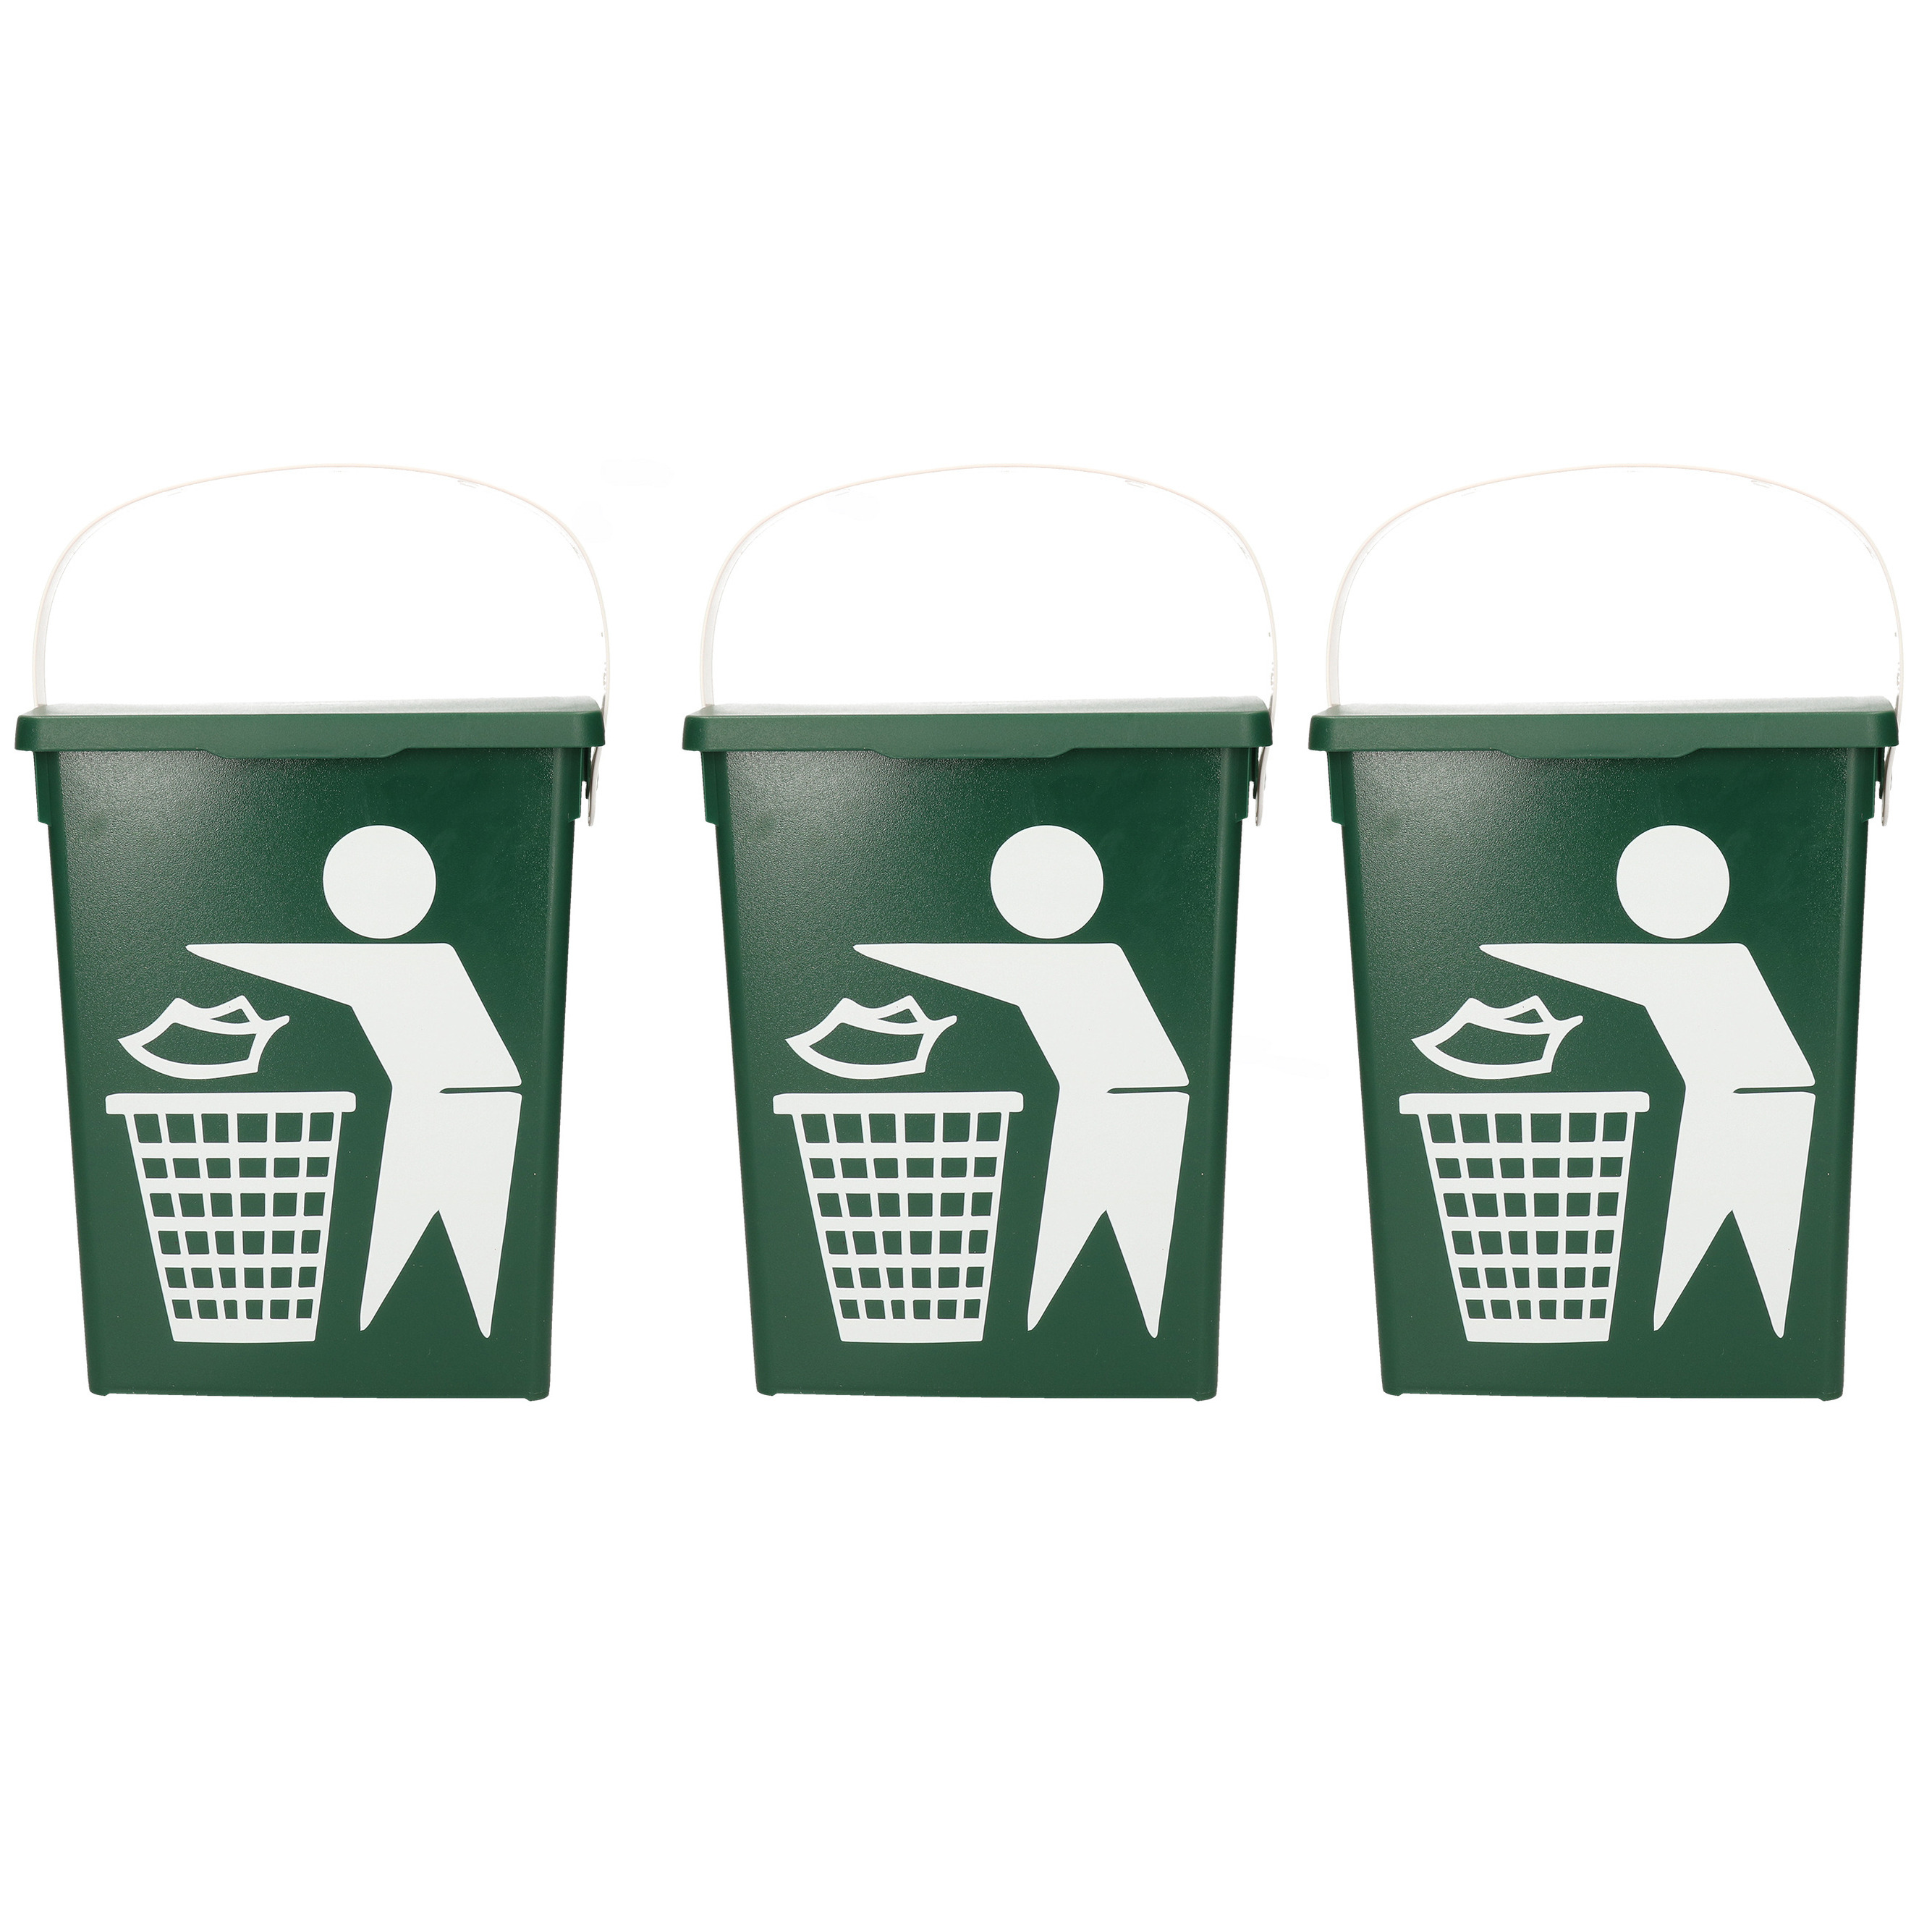 3x stuks groene vuilnisbakken-afvalbak voor gft-organisch afval 5 liter